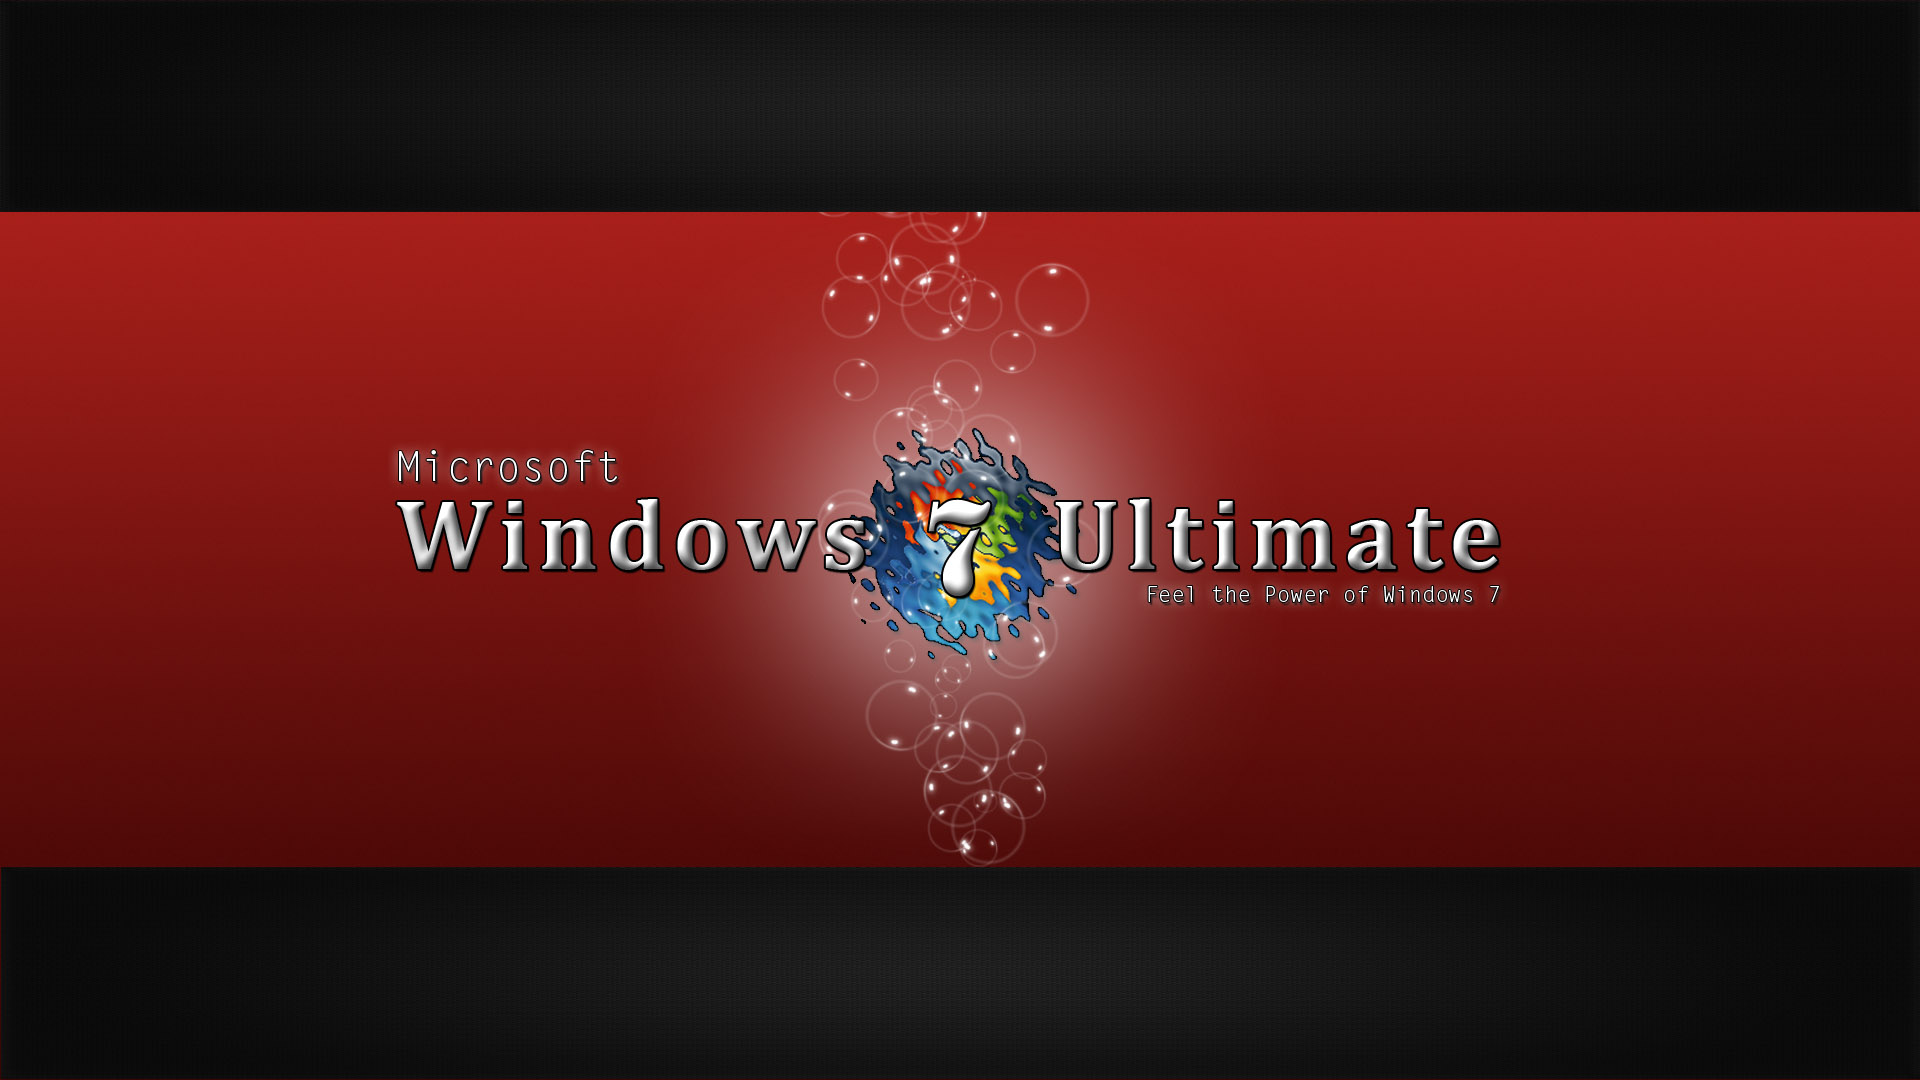 Windows Ultimate Wallpaper